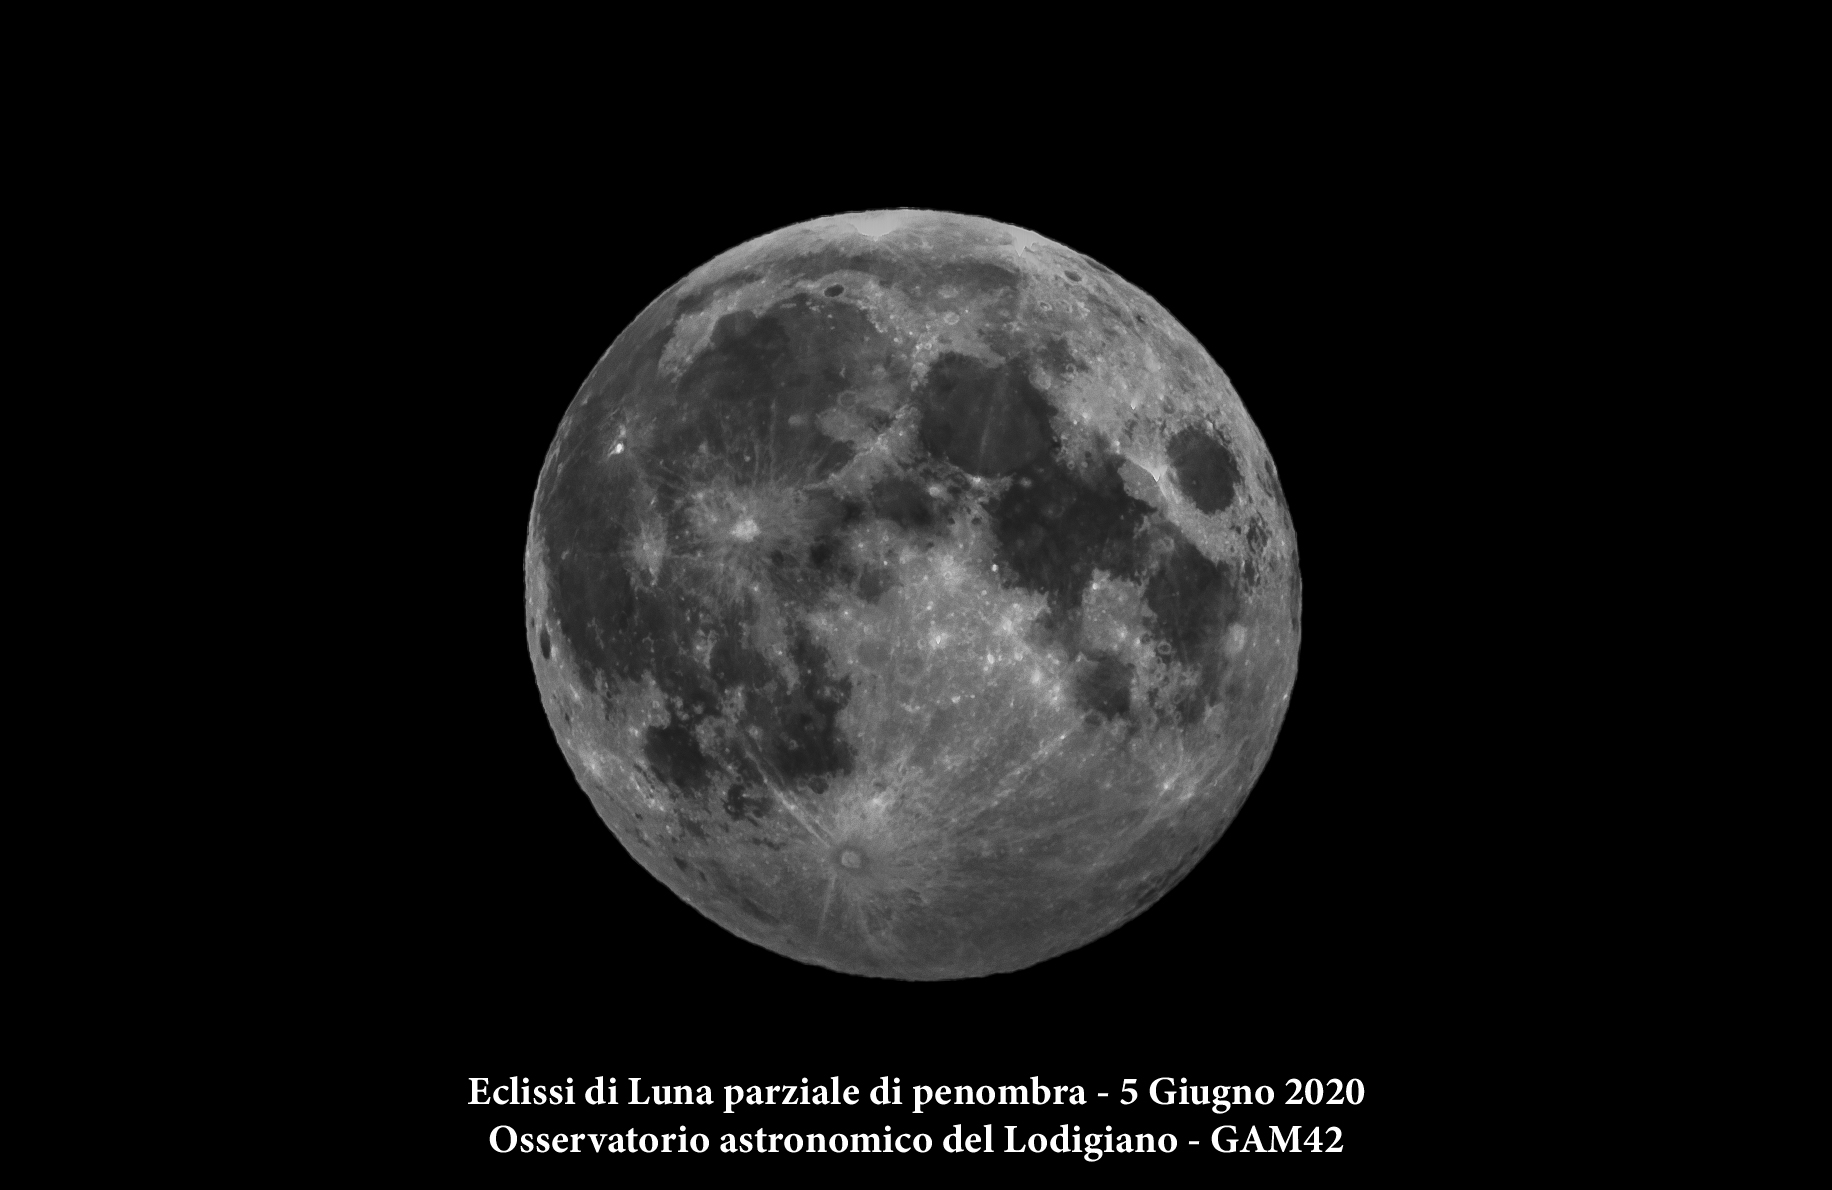 Partial lunar eclipse of penumbra...